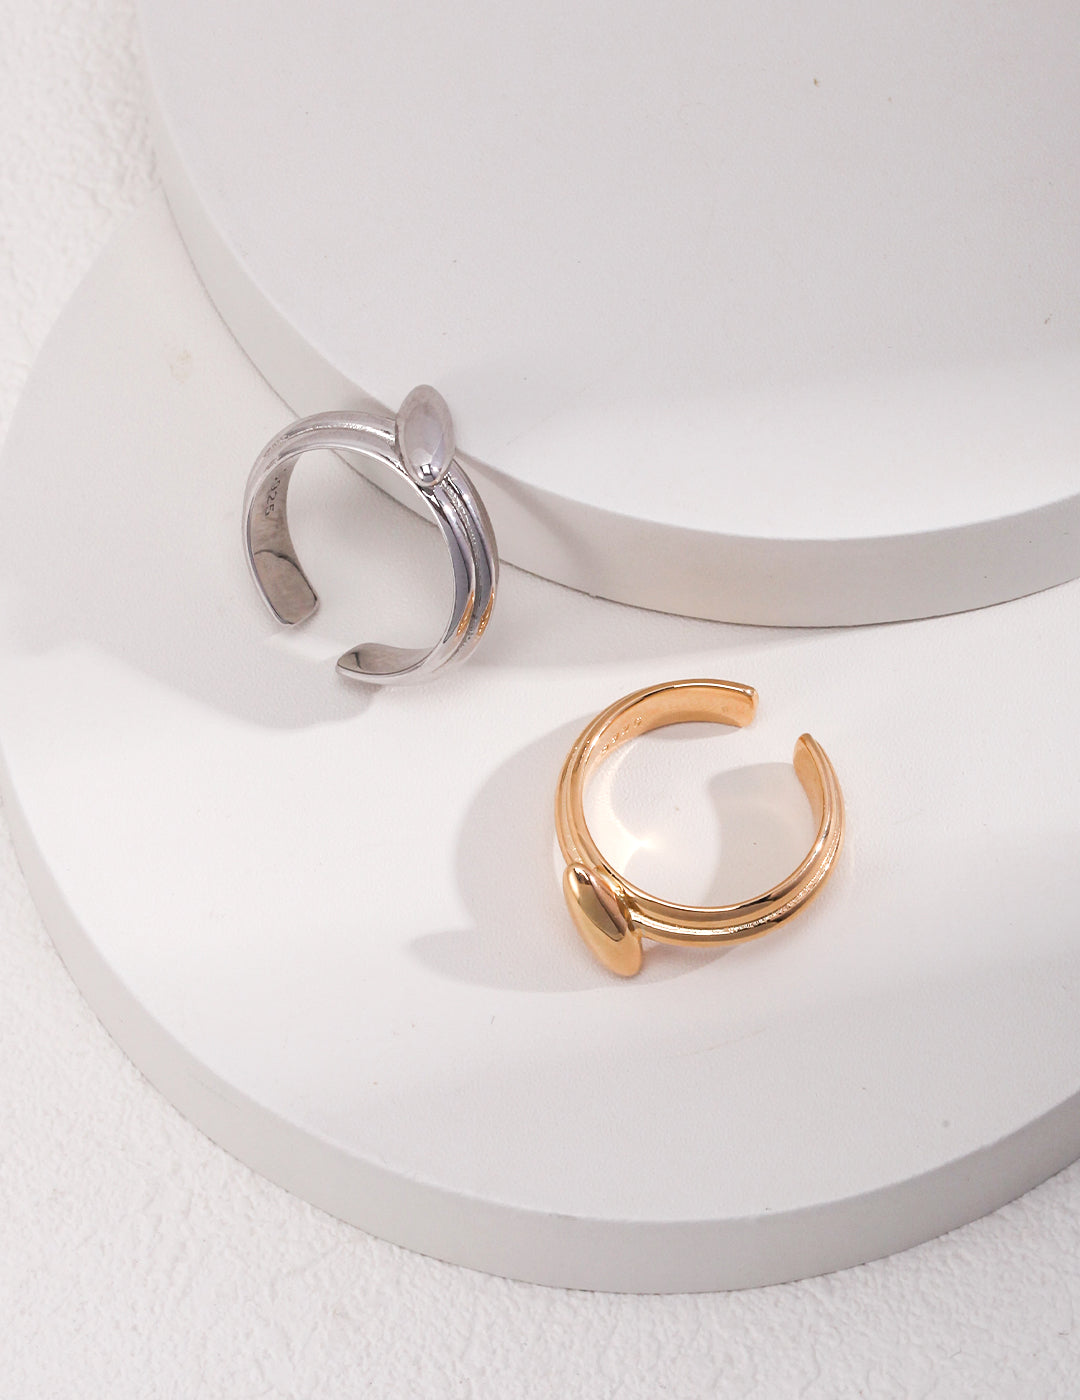 Plain Silver Oval Beanrings Ring